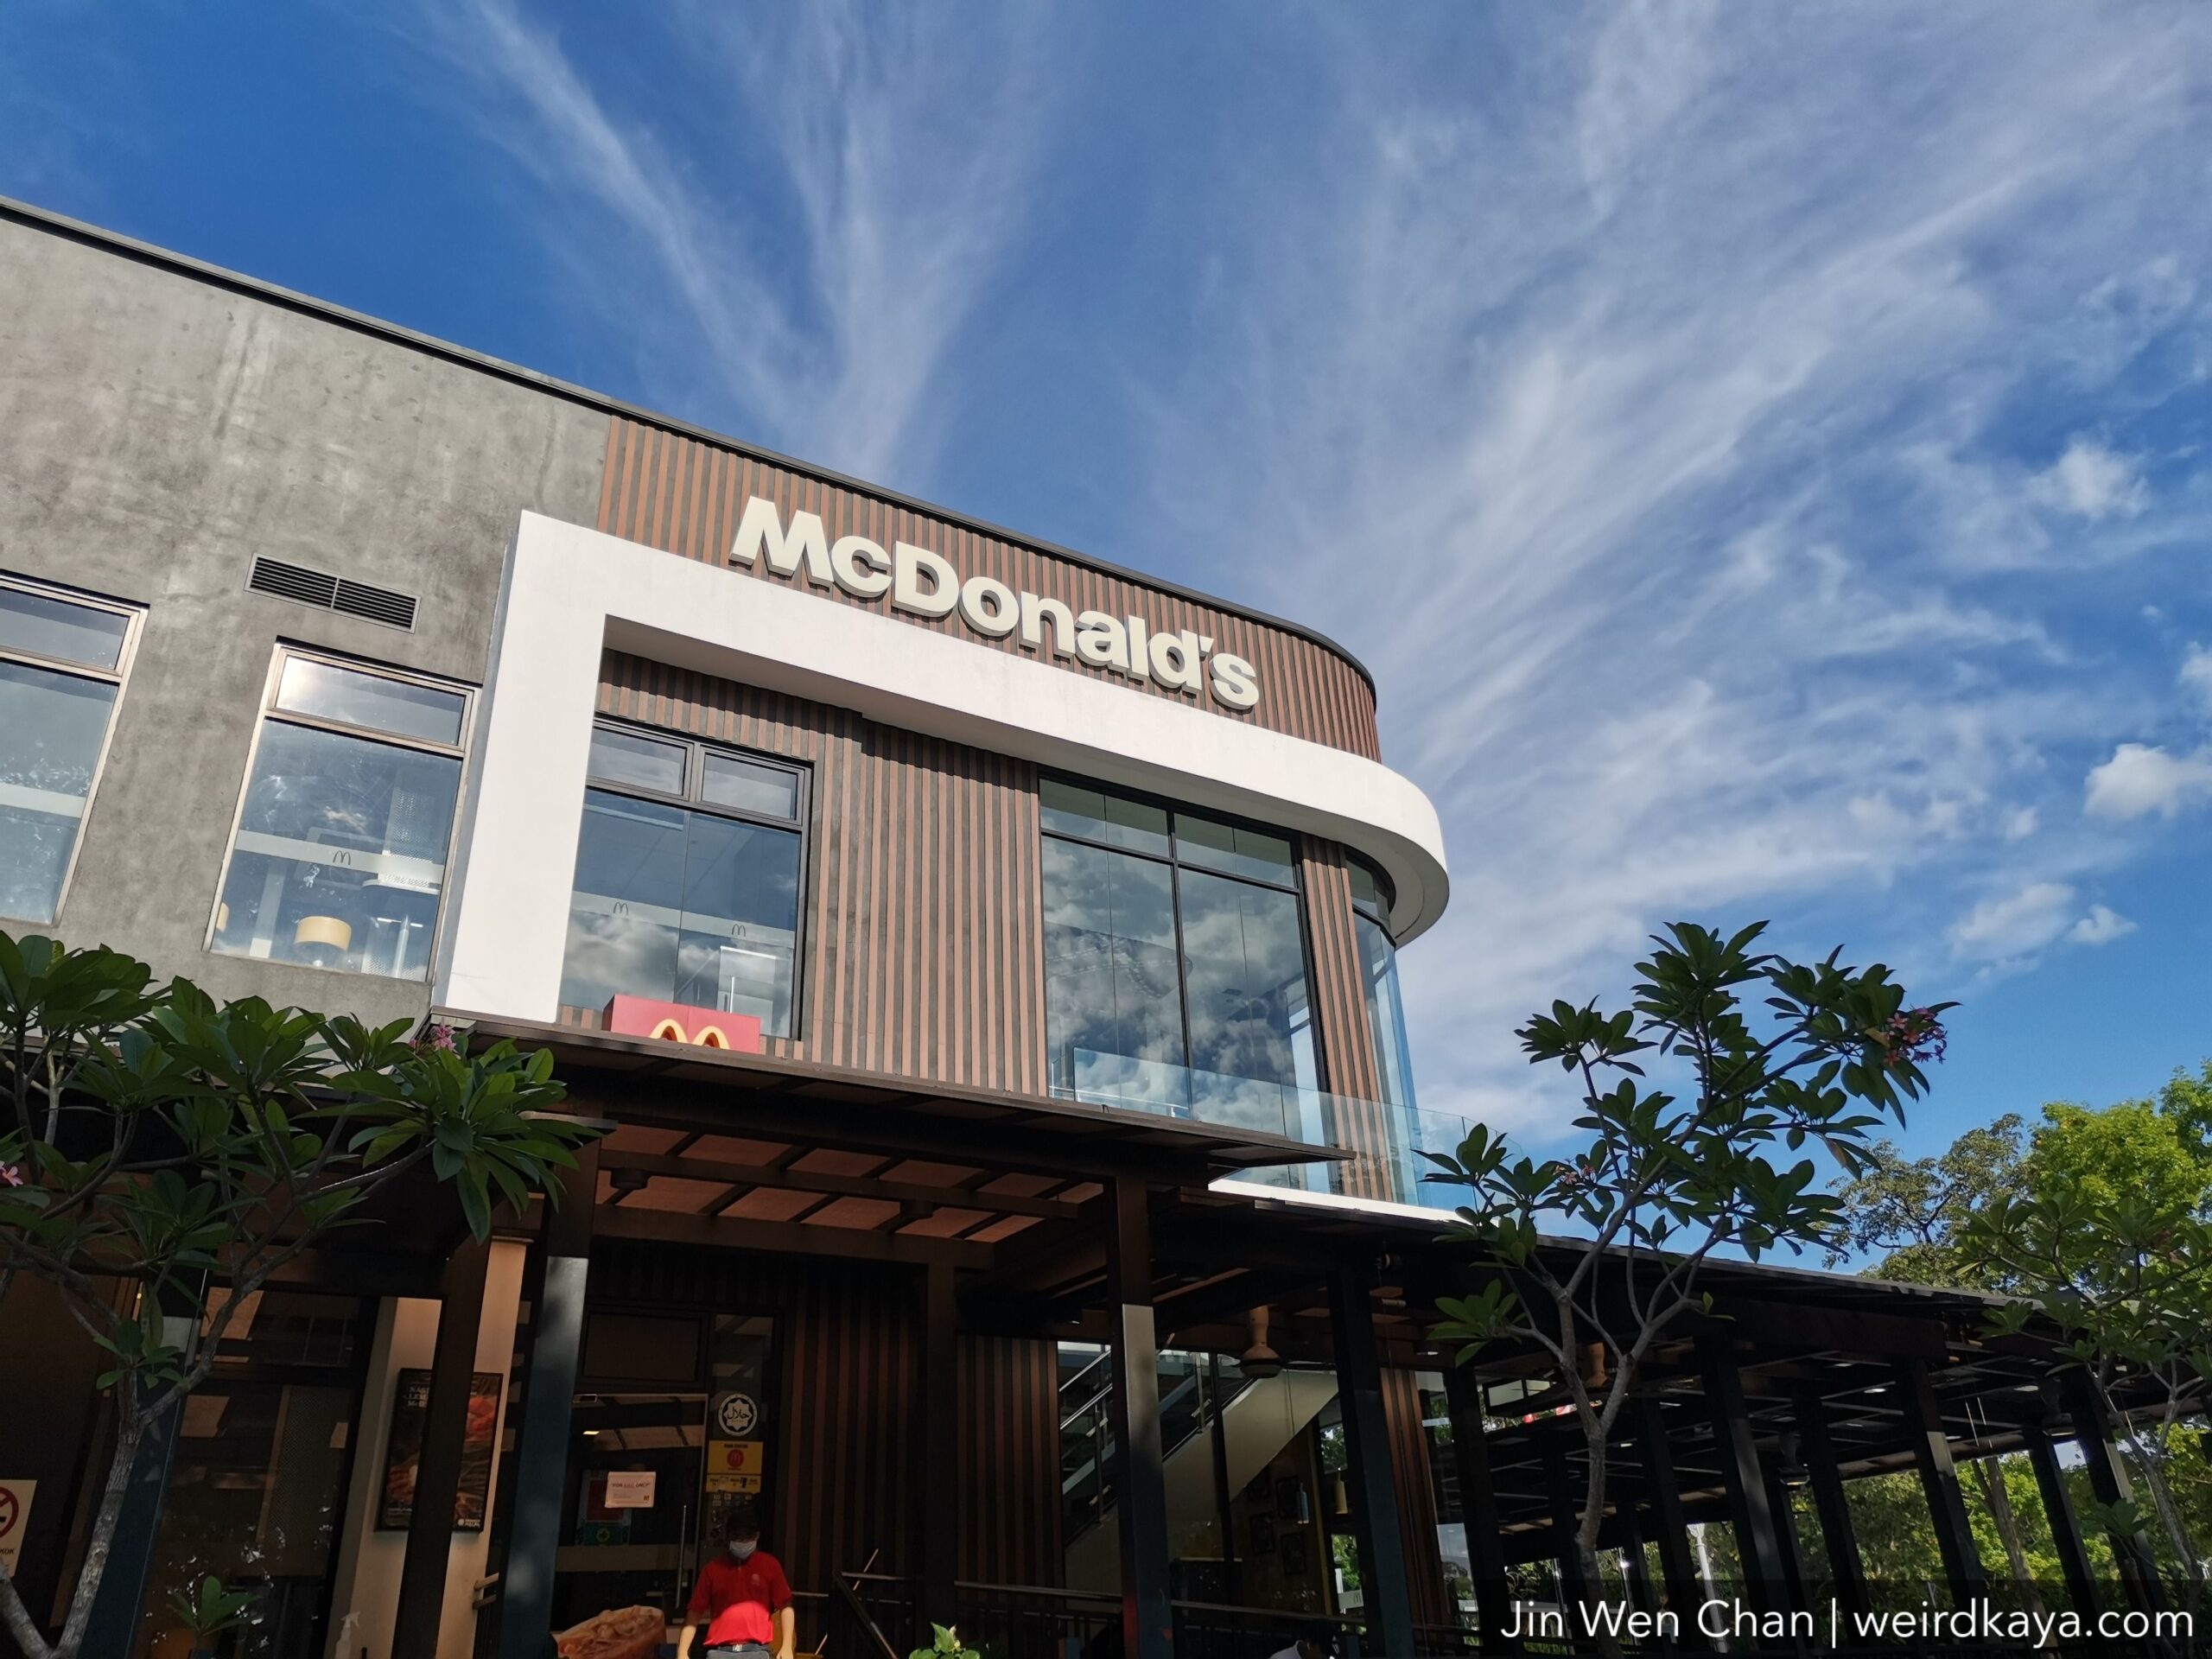 Mcdonald's malaysia